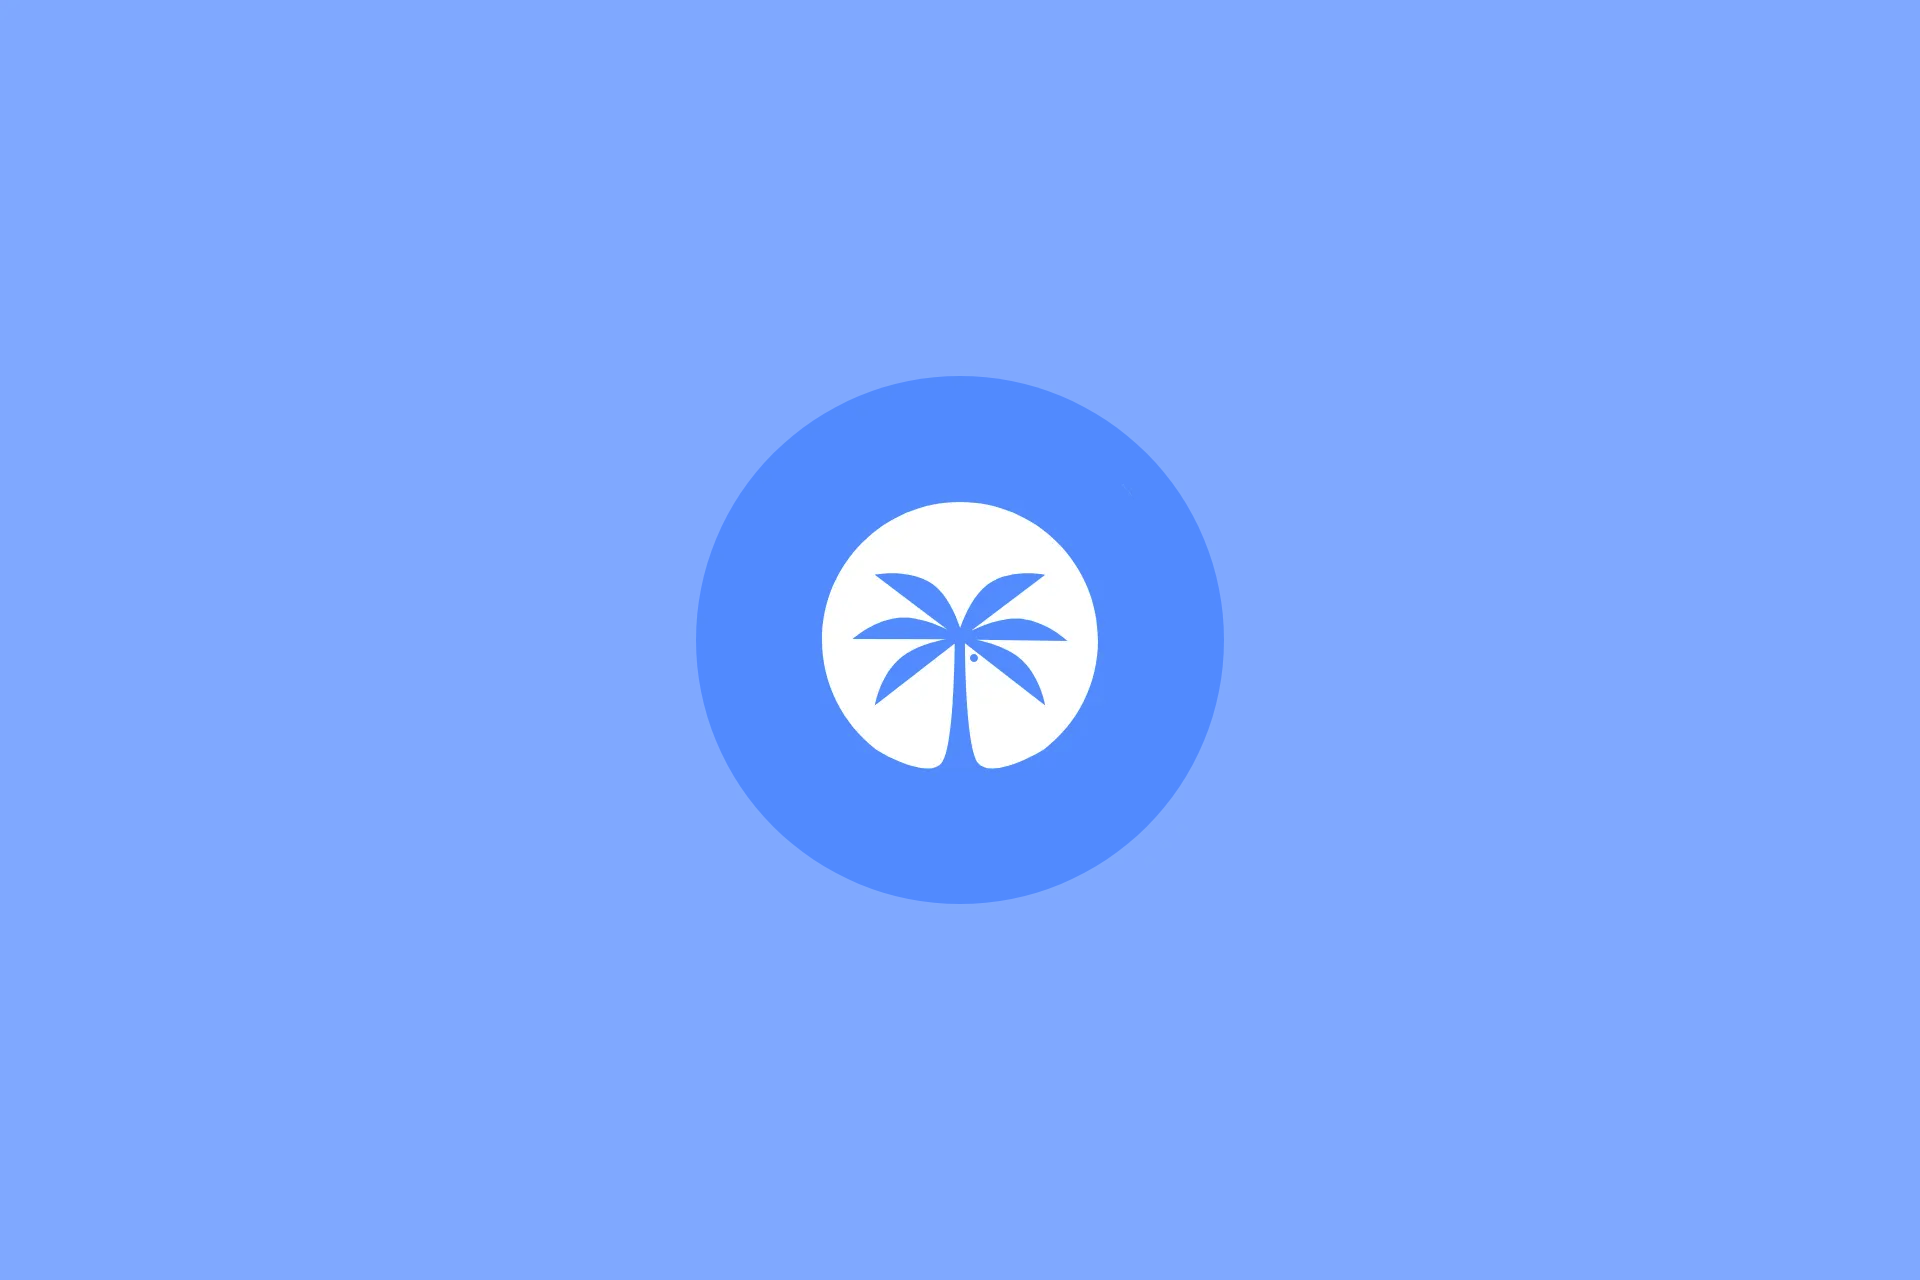 SURFVERSE logo on a blue background